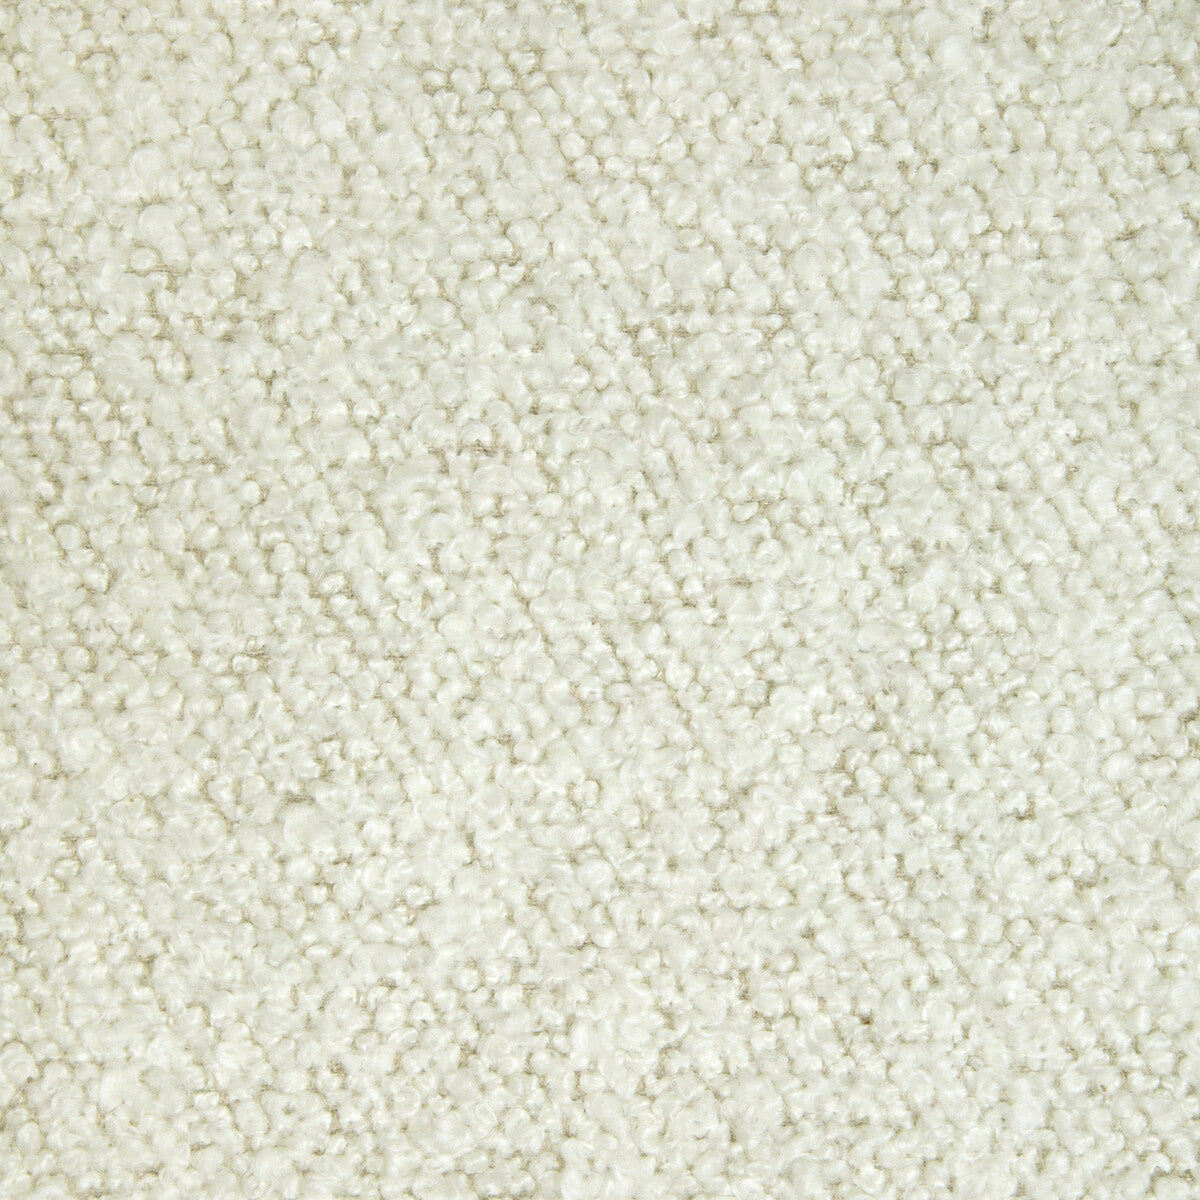 Kravet Smart fabric in 36114-101 color - pattern 36114.101.0 - by Kravet Smart